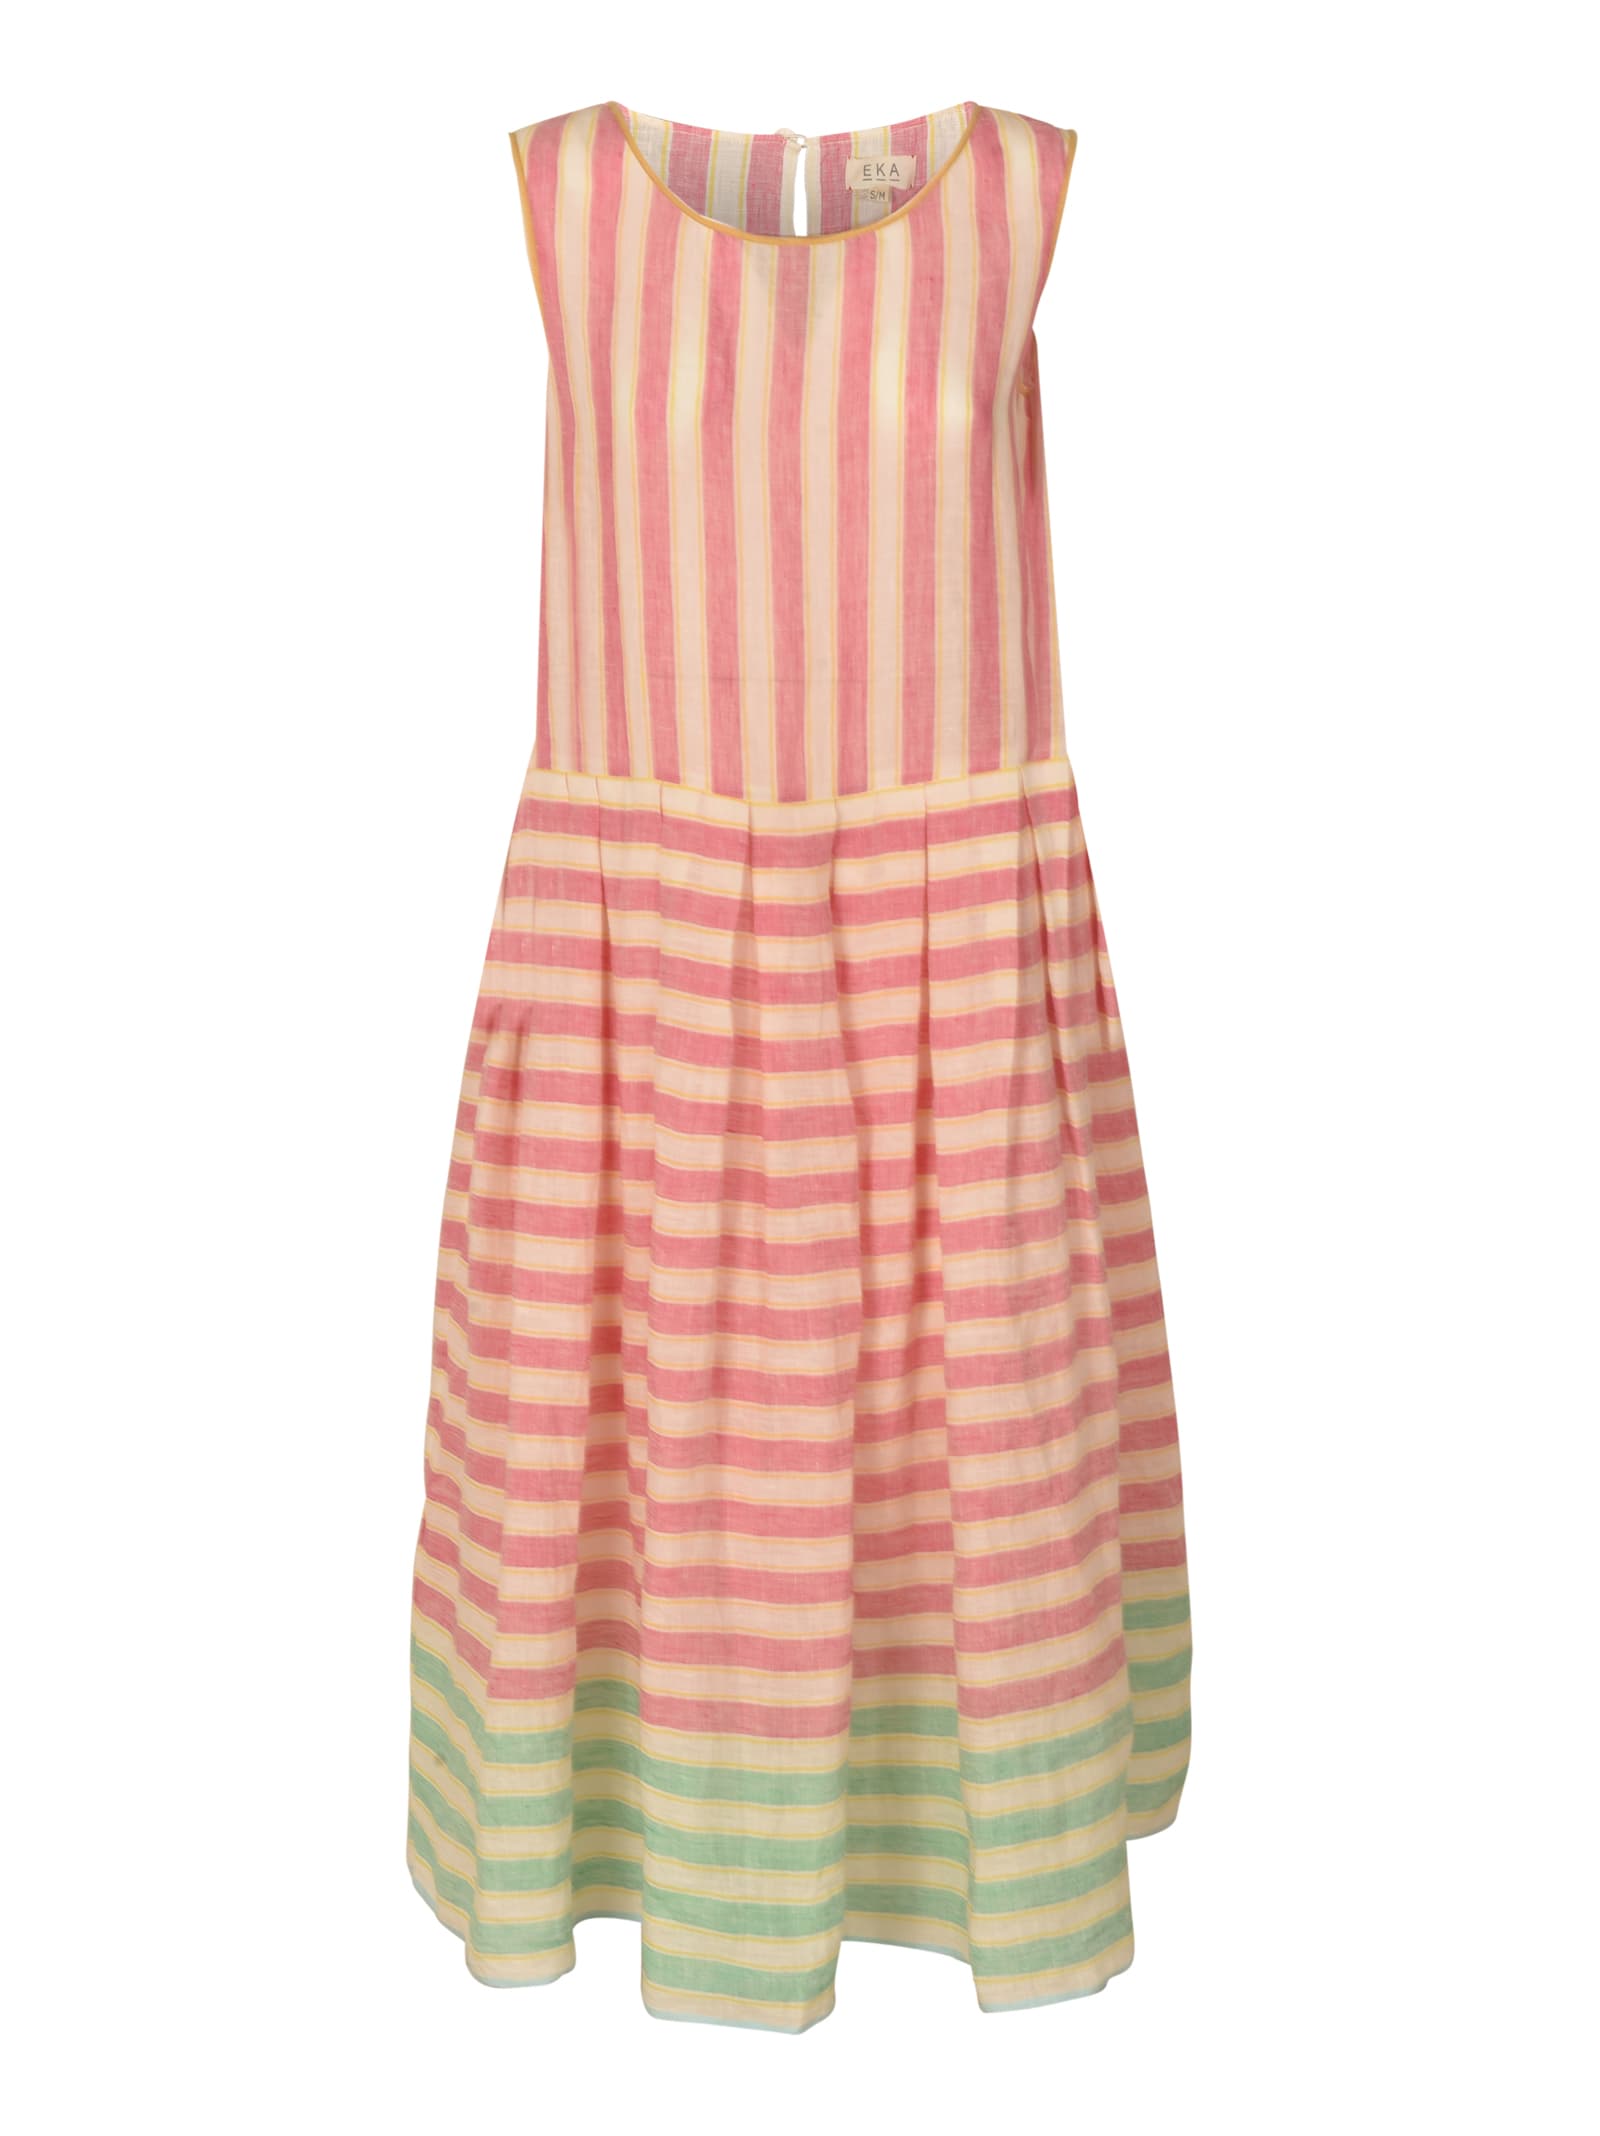 Eka Stripe Print Dress In Cherry